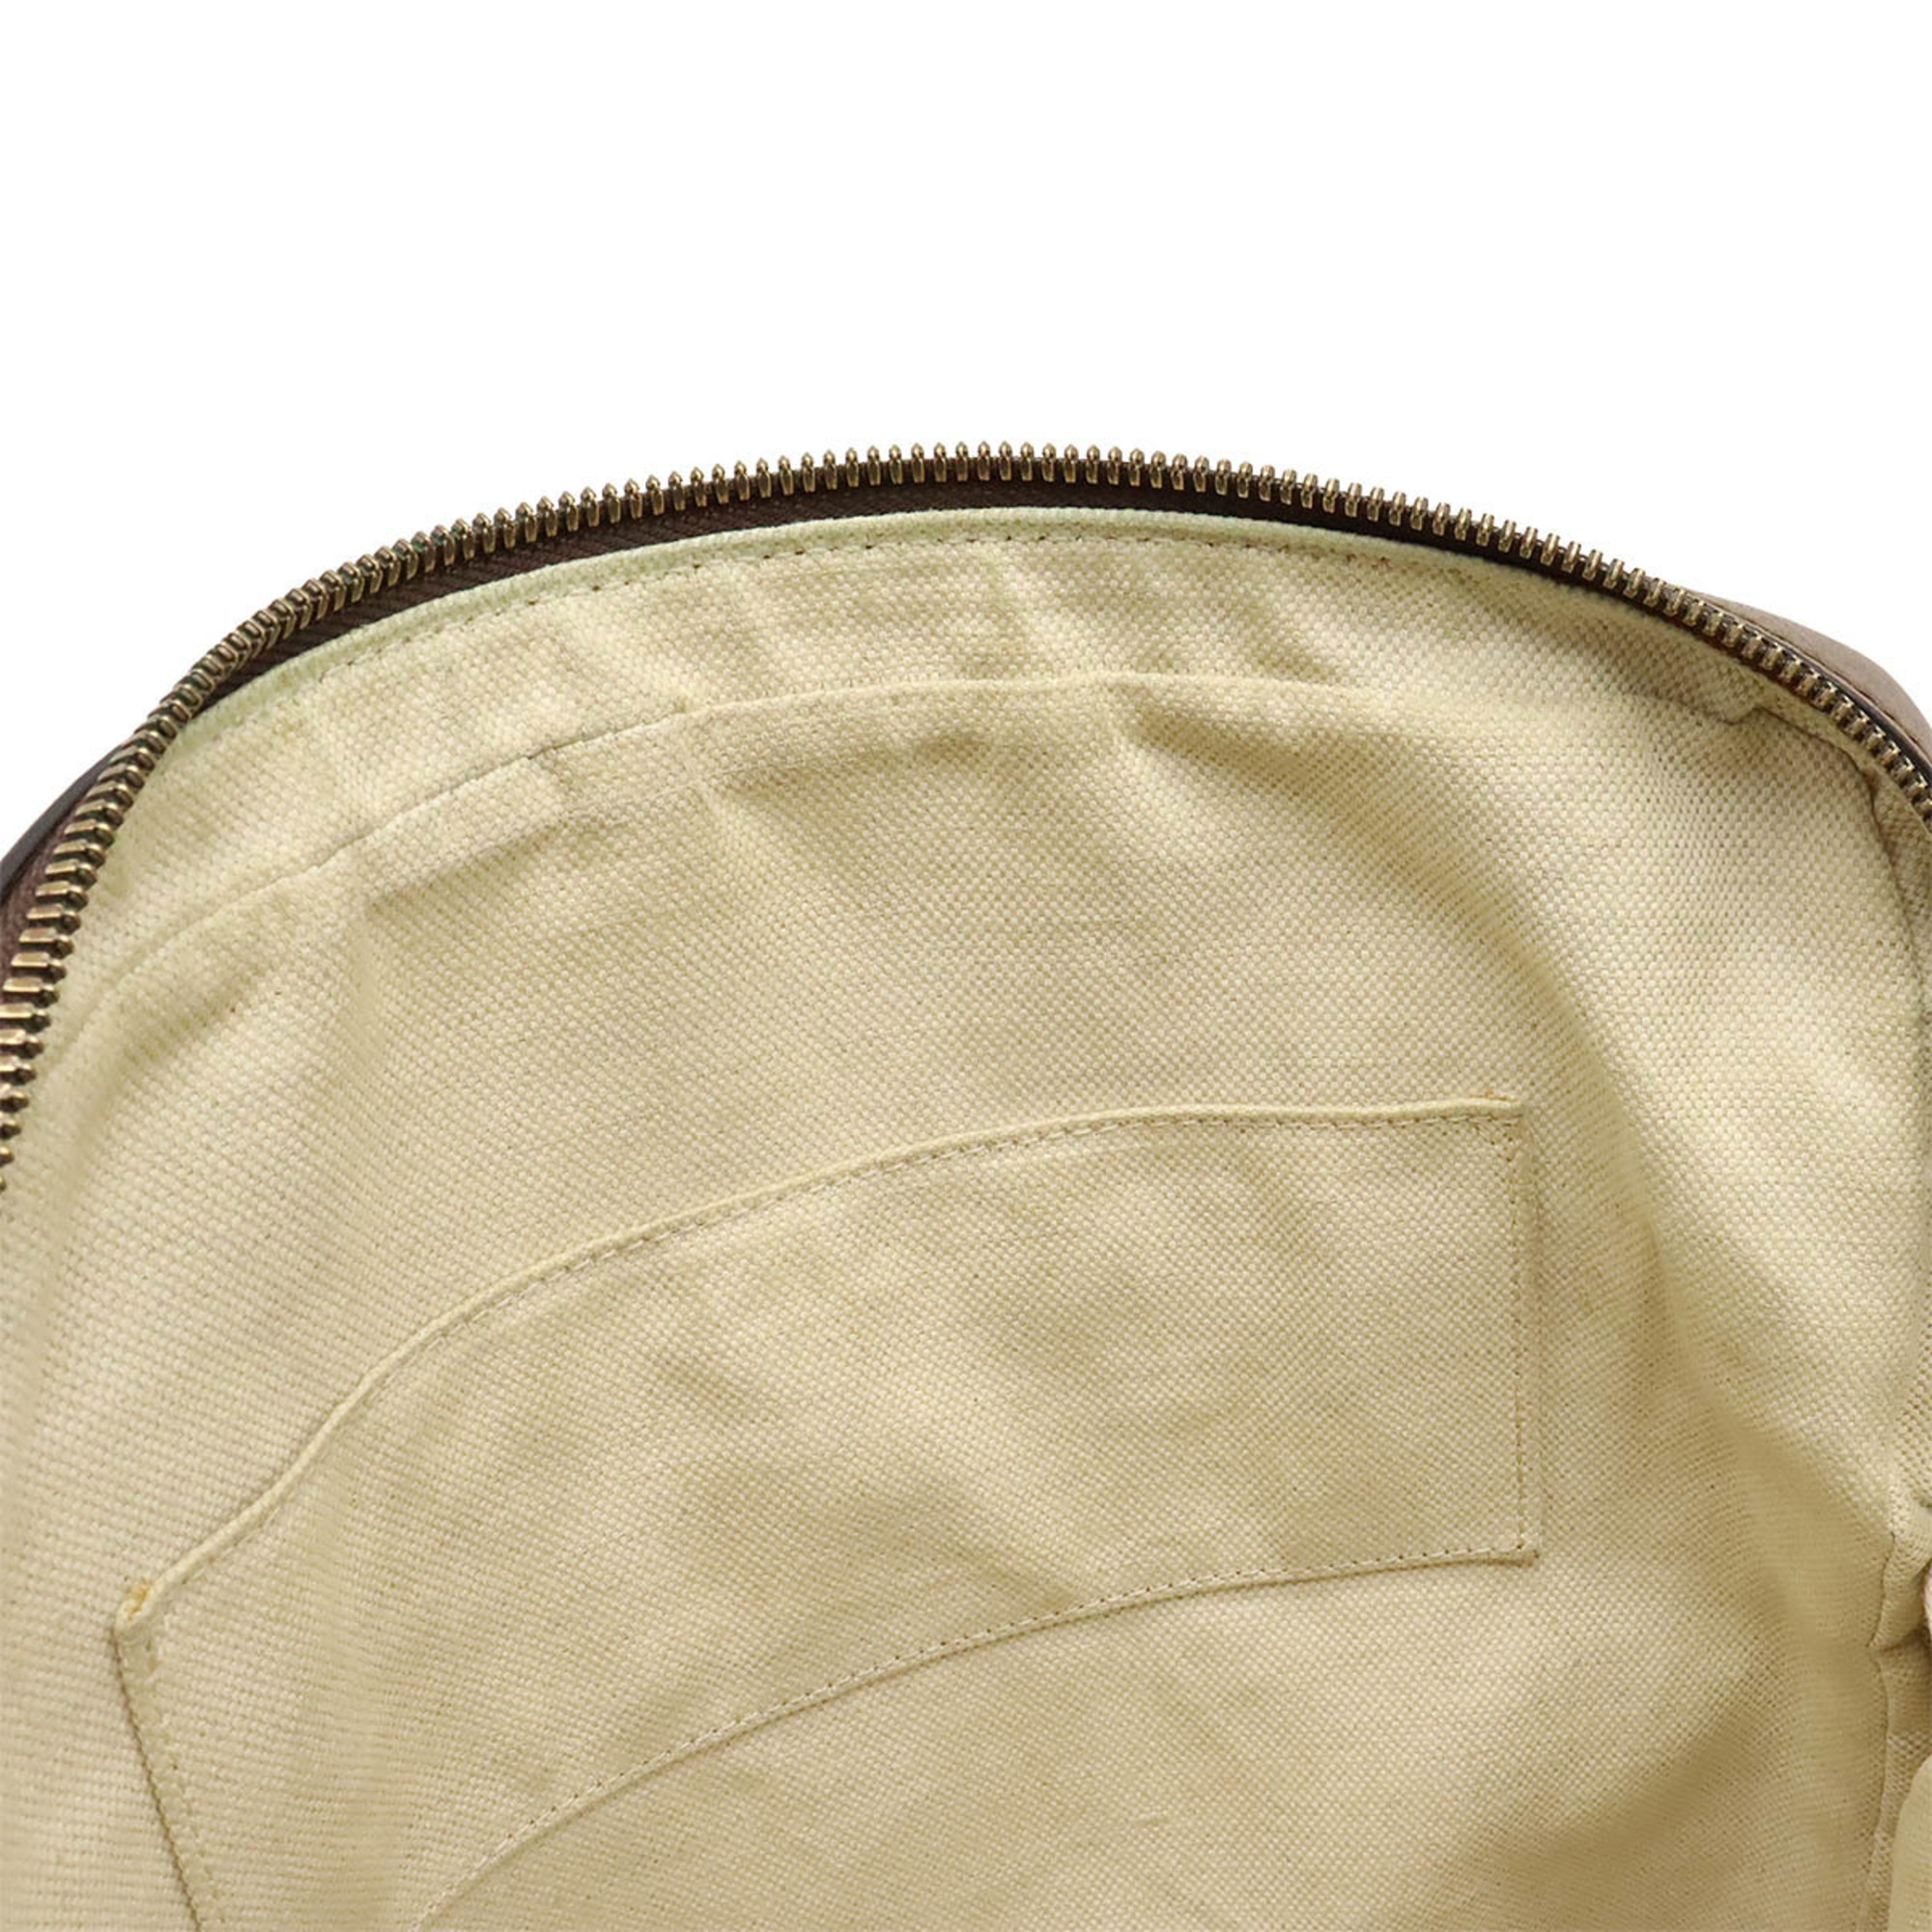 GUCCI Ophidia GG Supreme Shoulder Bag PVC Leather Khaki Beige Dark Brown Green Red 547934